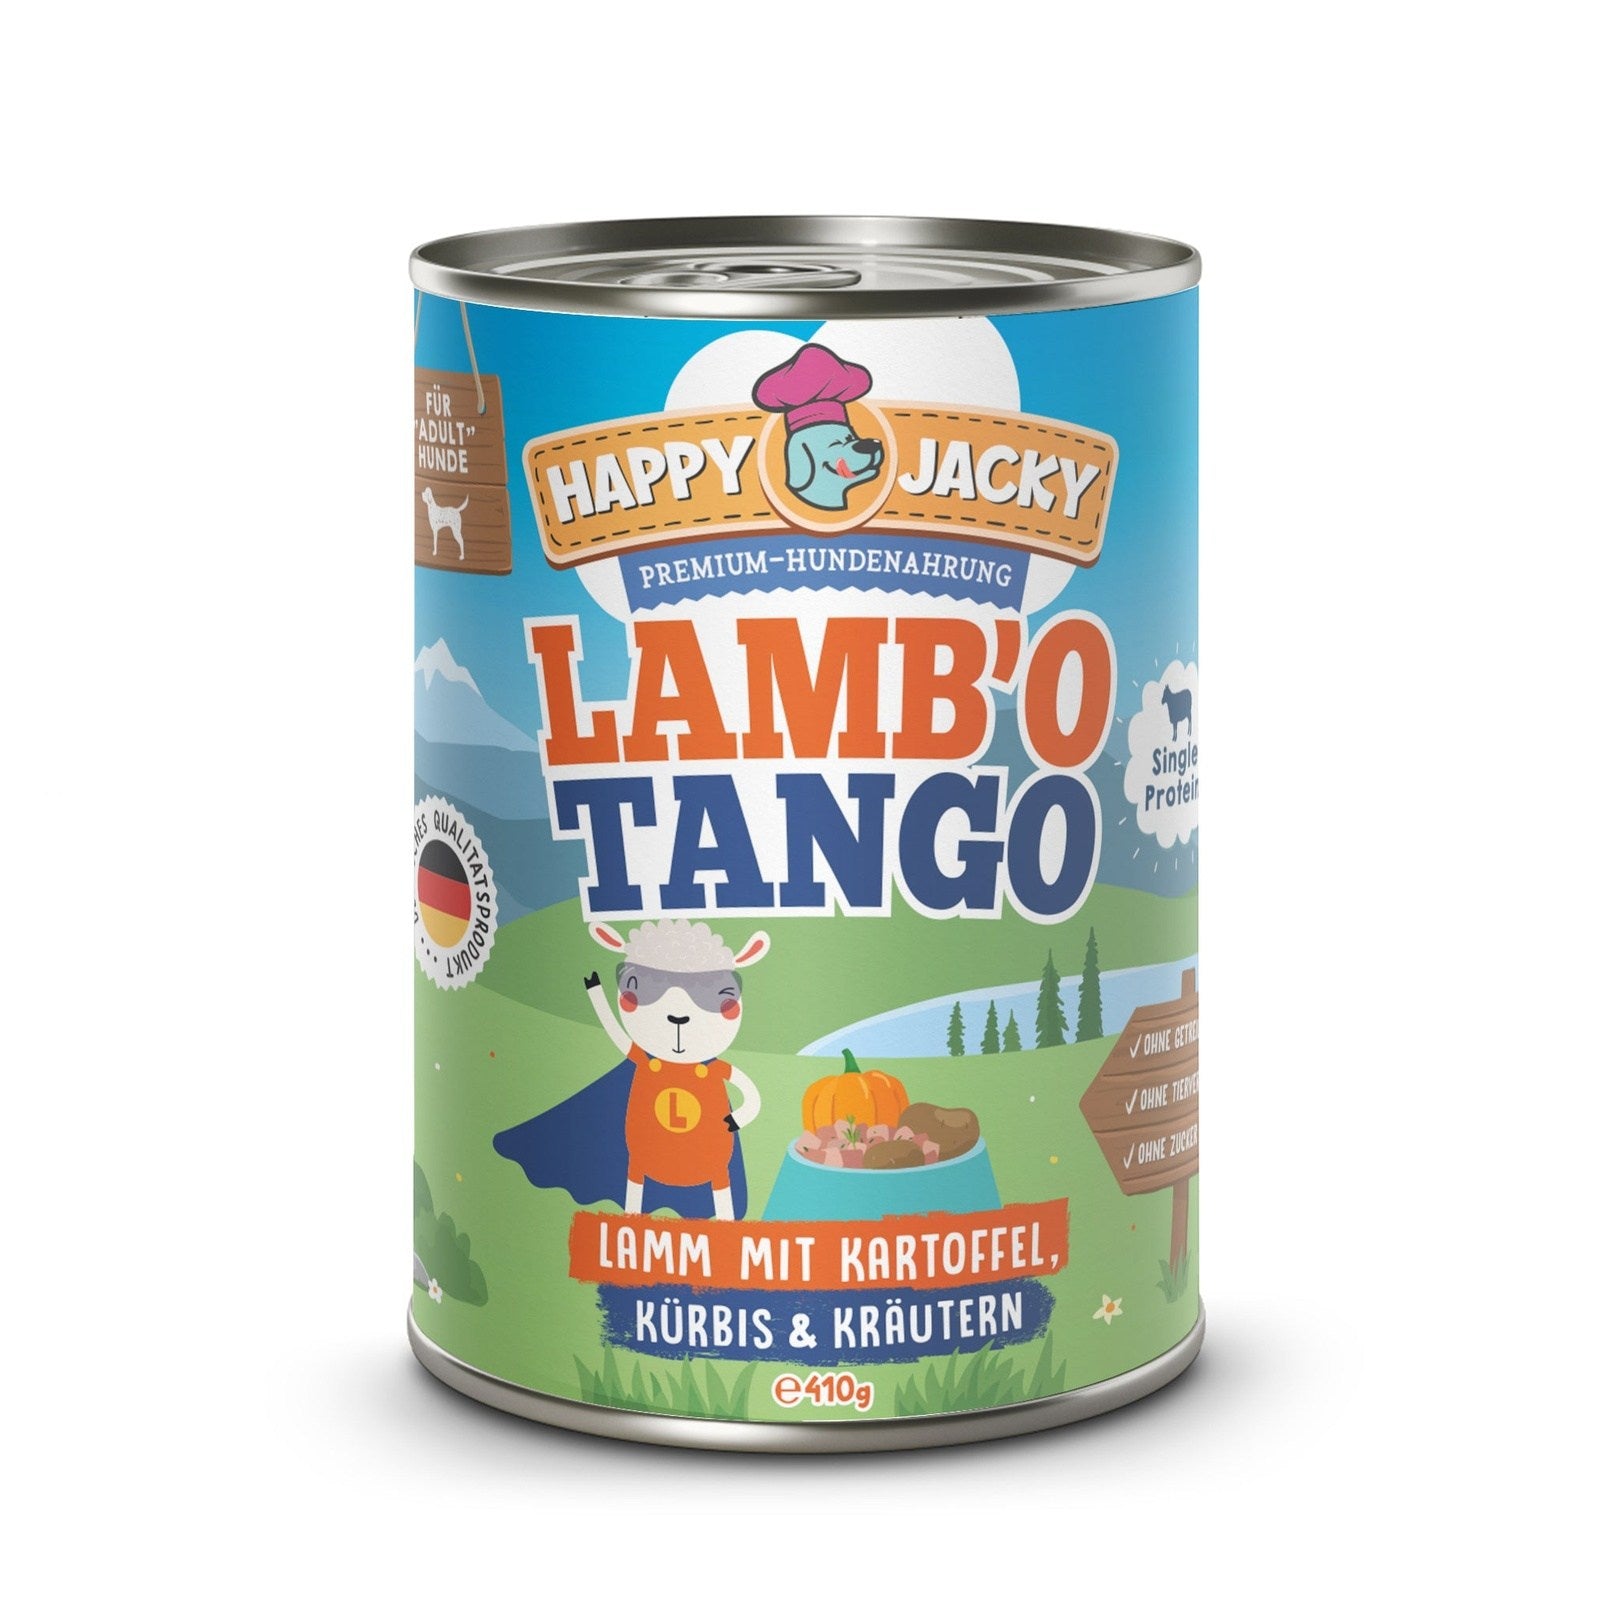 Lamb'oTango - Lamm mit Kartoffel, Kürbis & Kräutern HAPPY JACKY